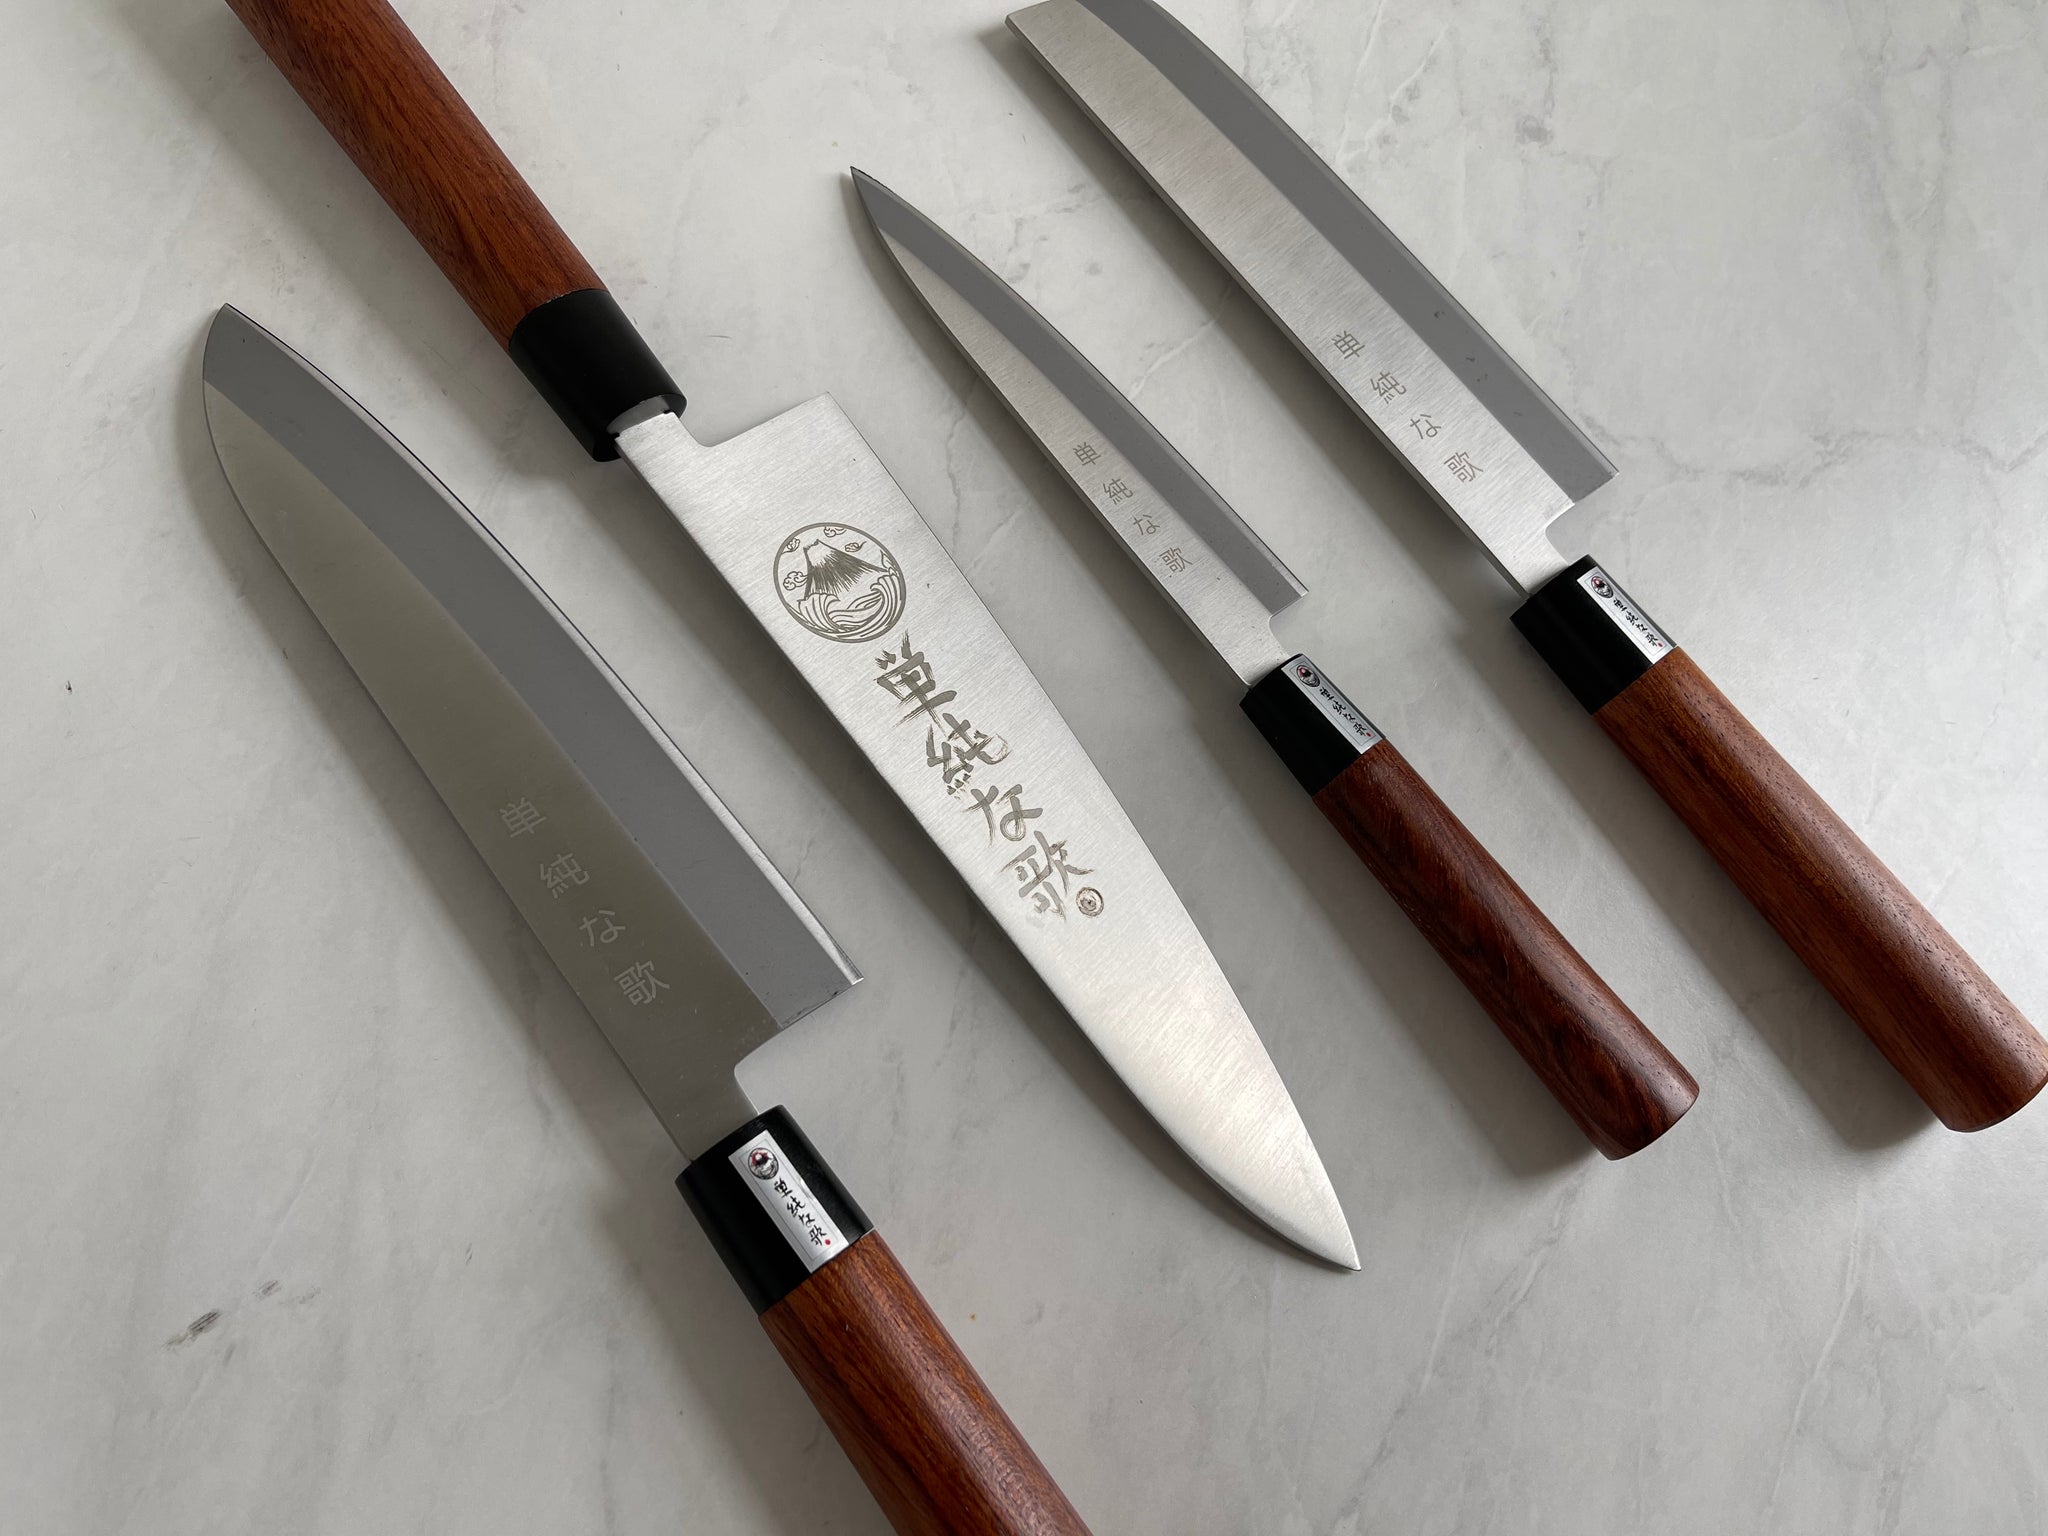 Traditional Japanese Professional Kitchen Chef Knife Set - Premium